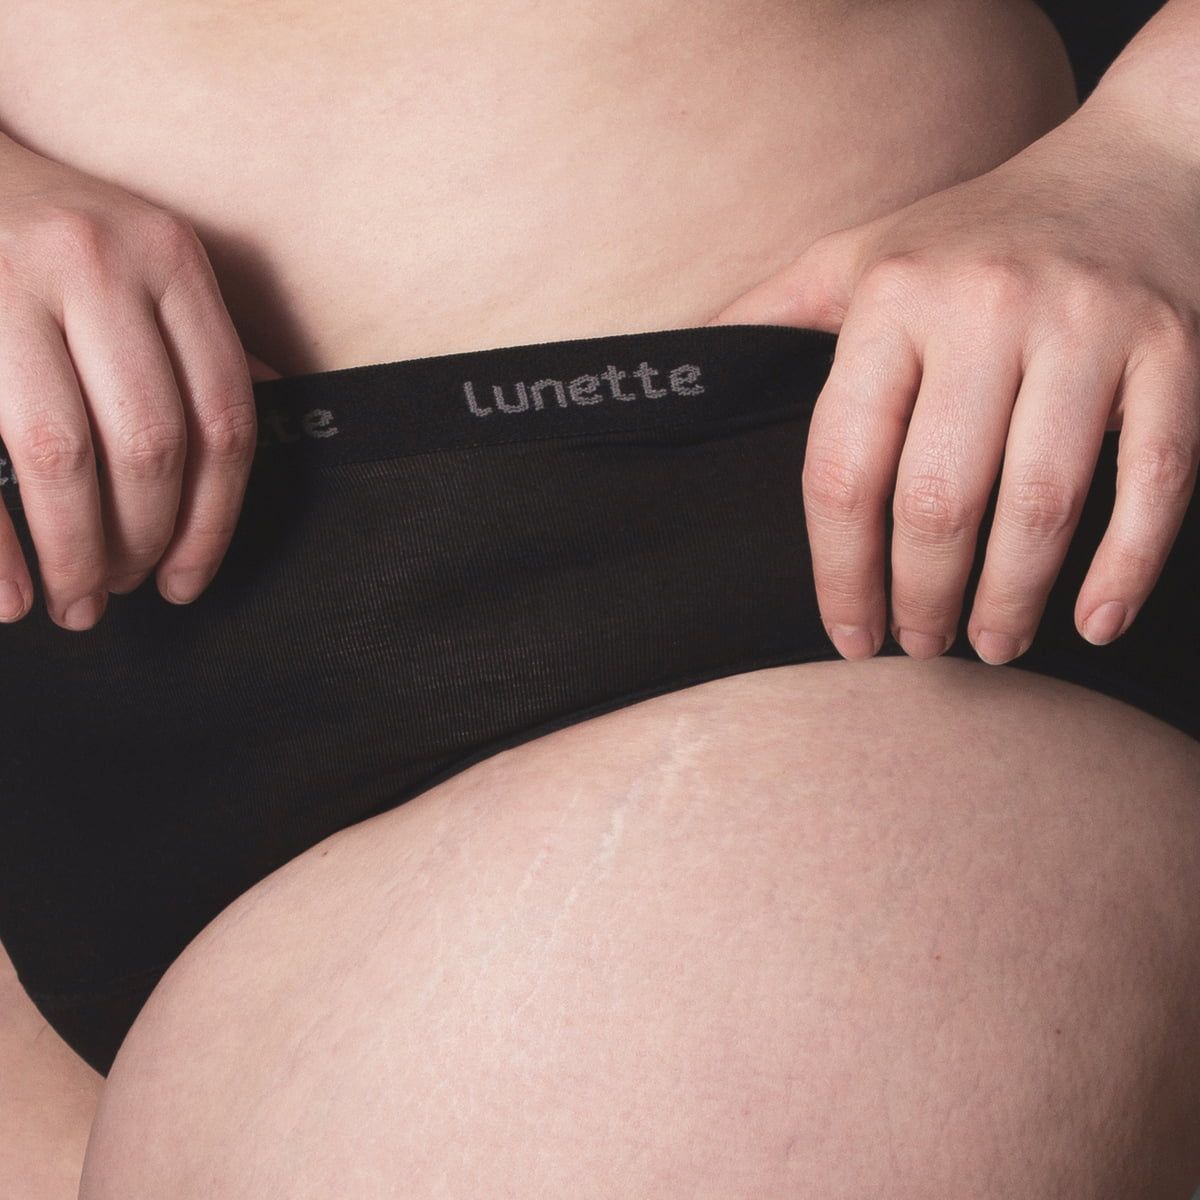 Panties for Ladies Online Shopping